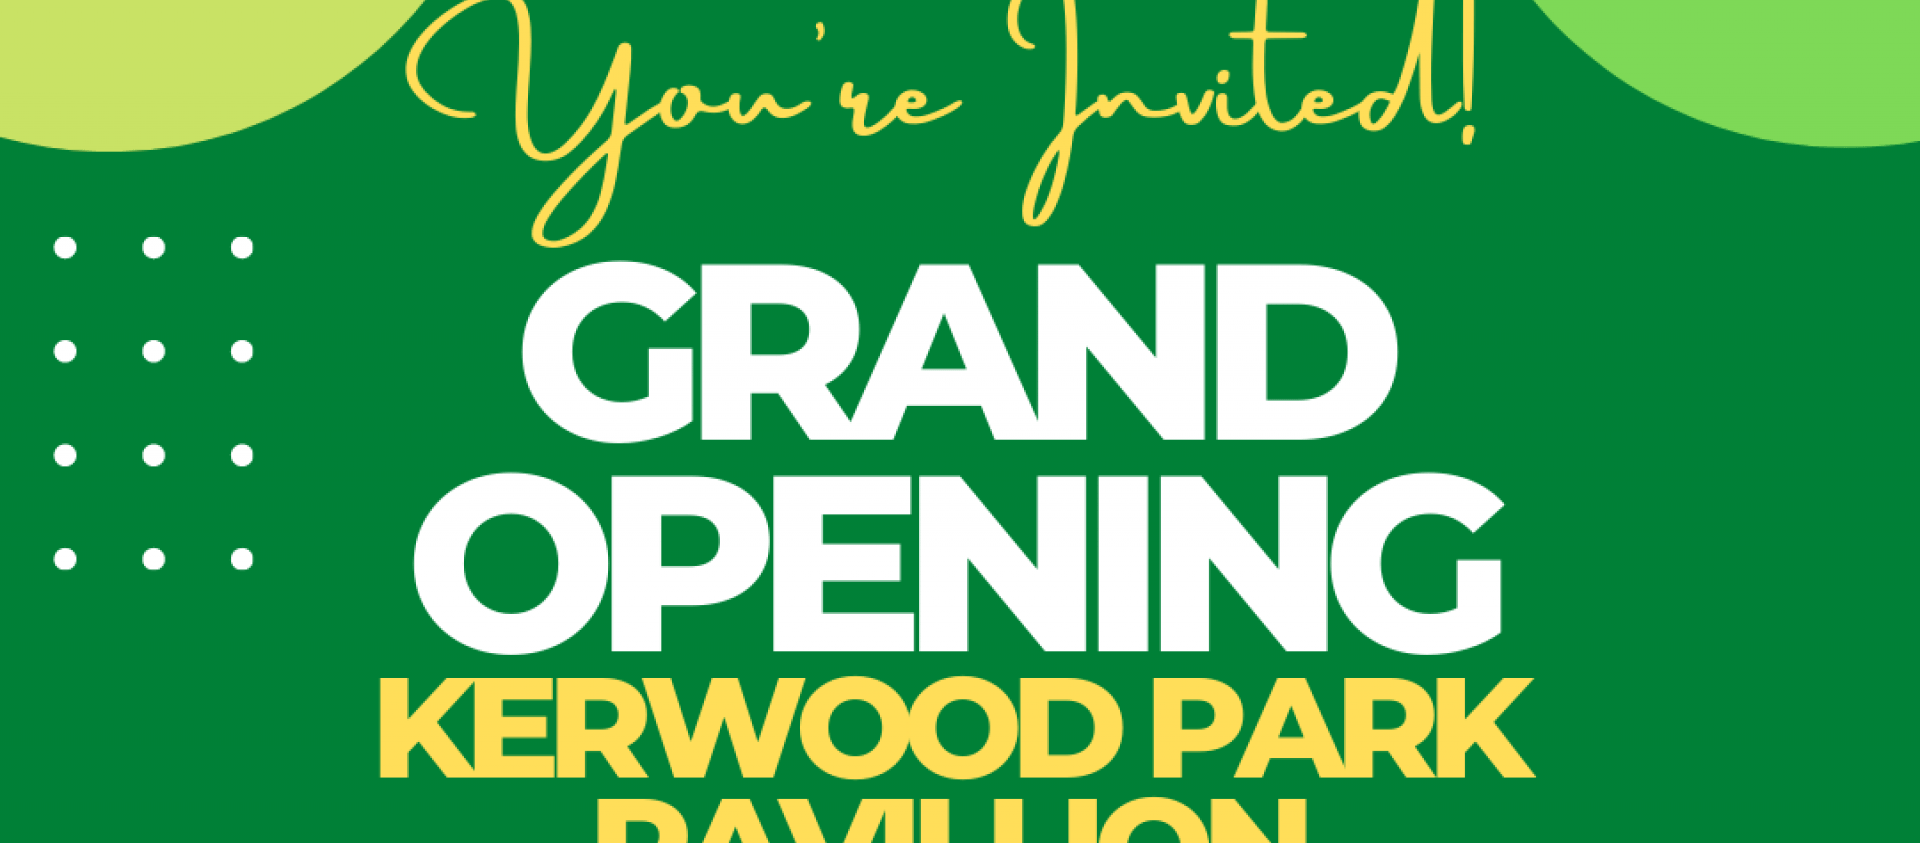 Kerwood Park Phase 1 Grand Opening Poster for June 3, 2022